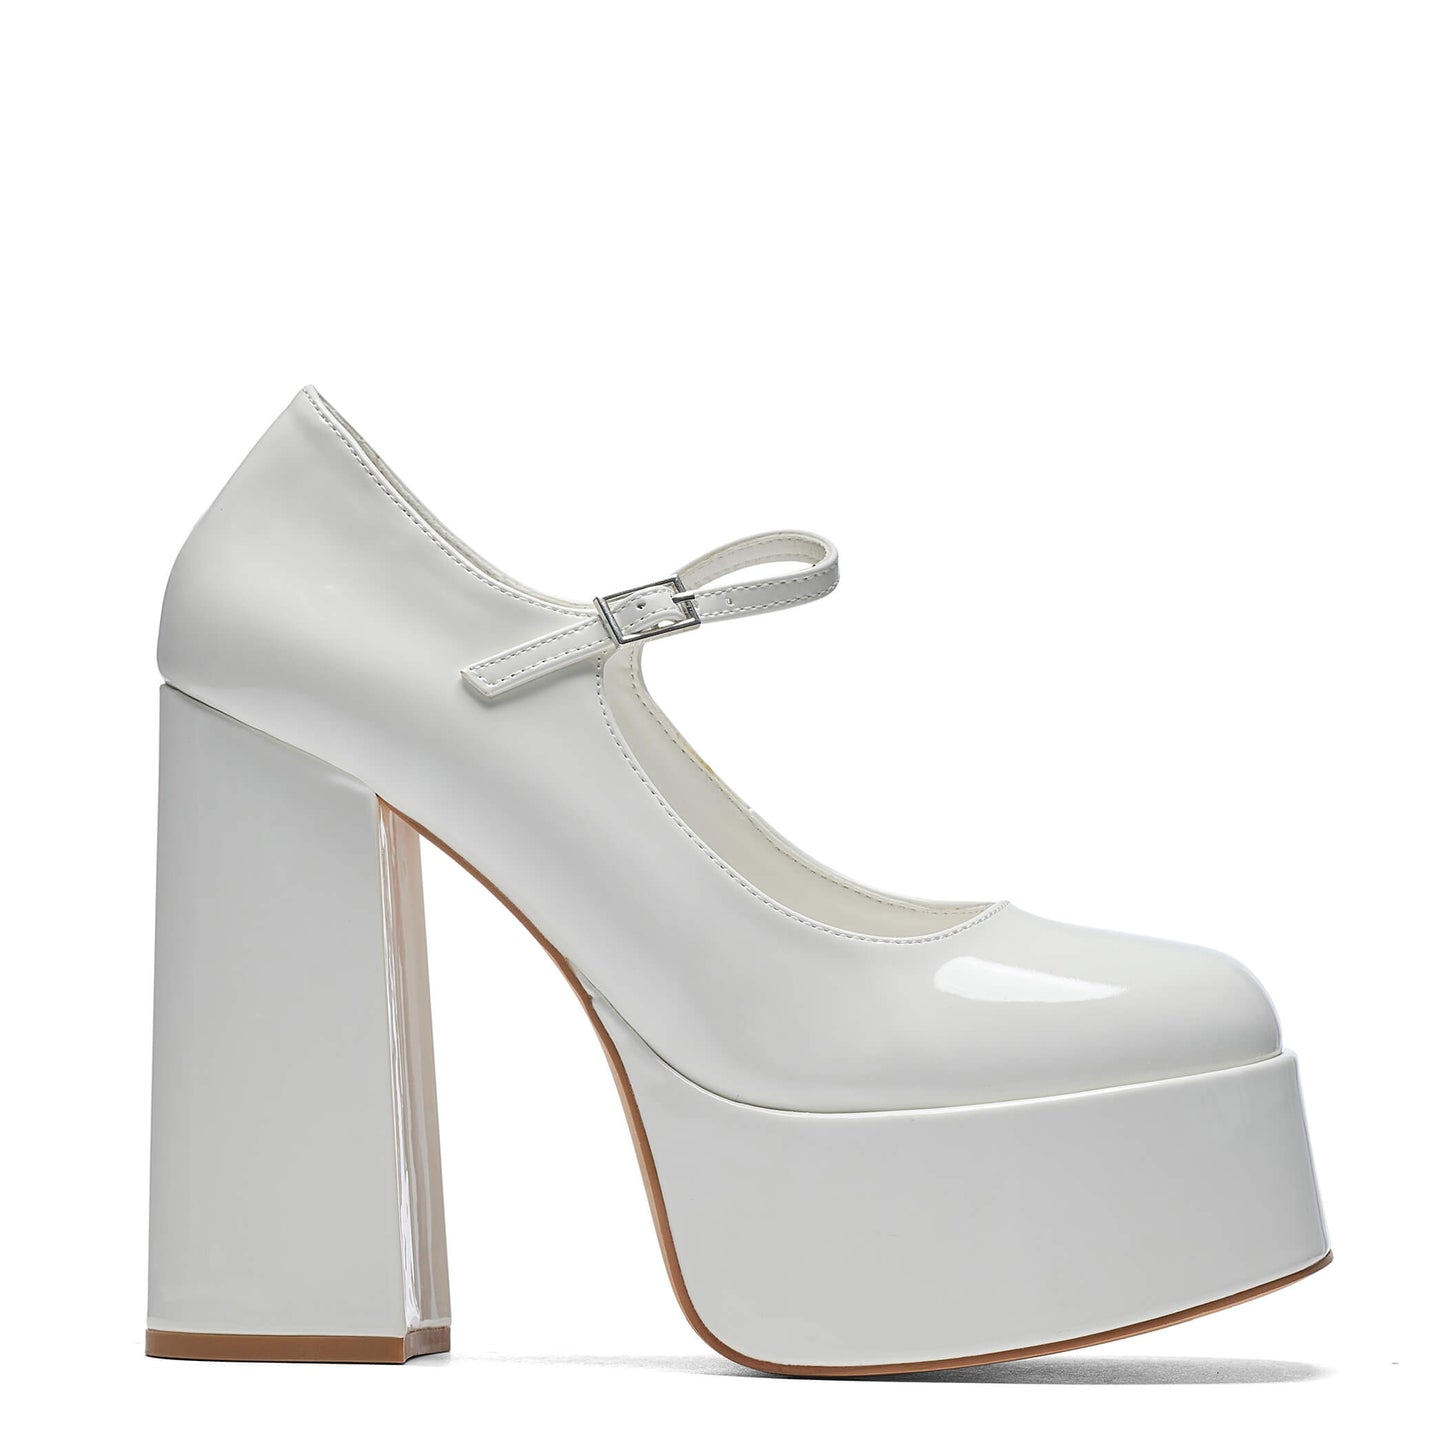 Darkbloom White Patent Platform Heels - Shoes - KOI Footwear - White - Side View